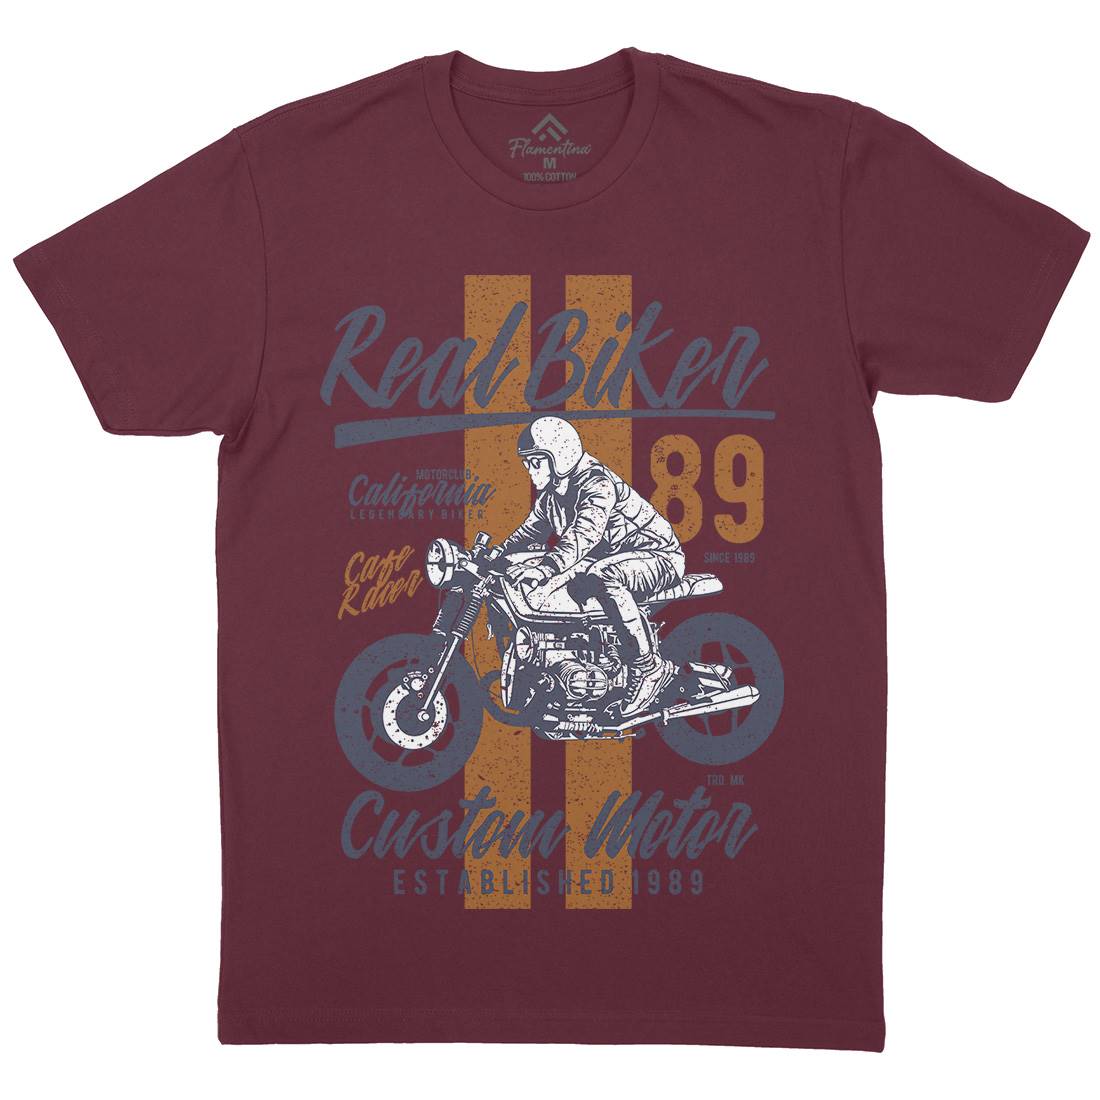 Real Biker Mens Crew Neck T-Shirt Motorcycles A739